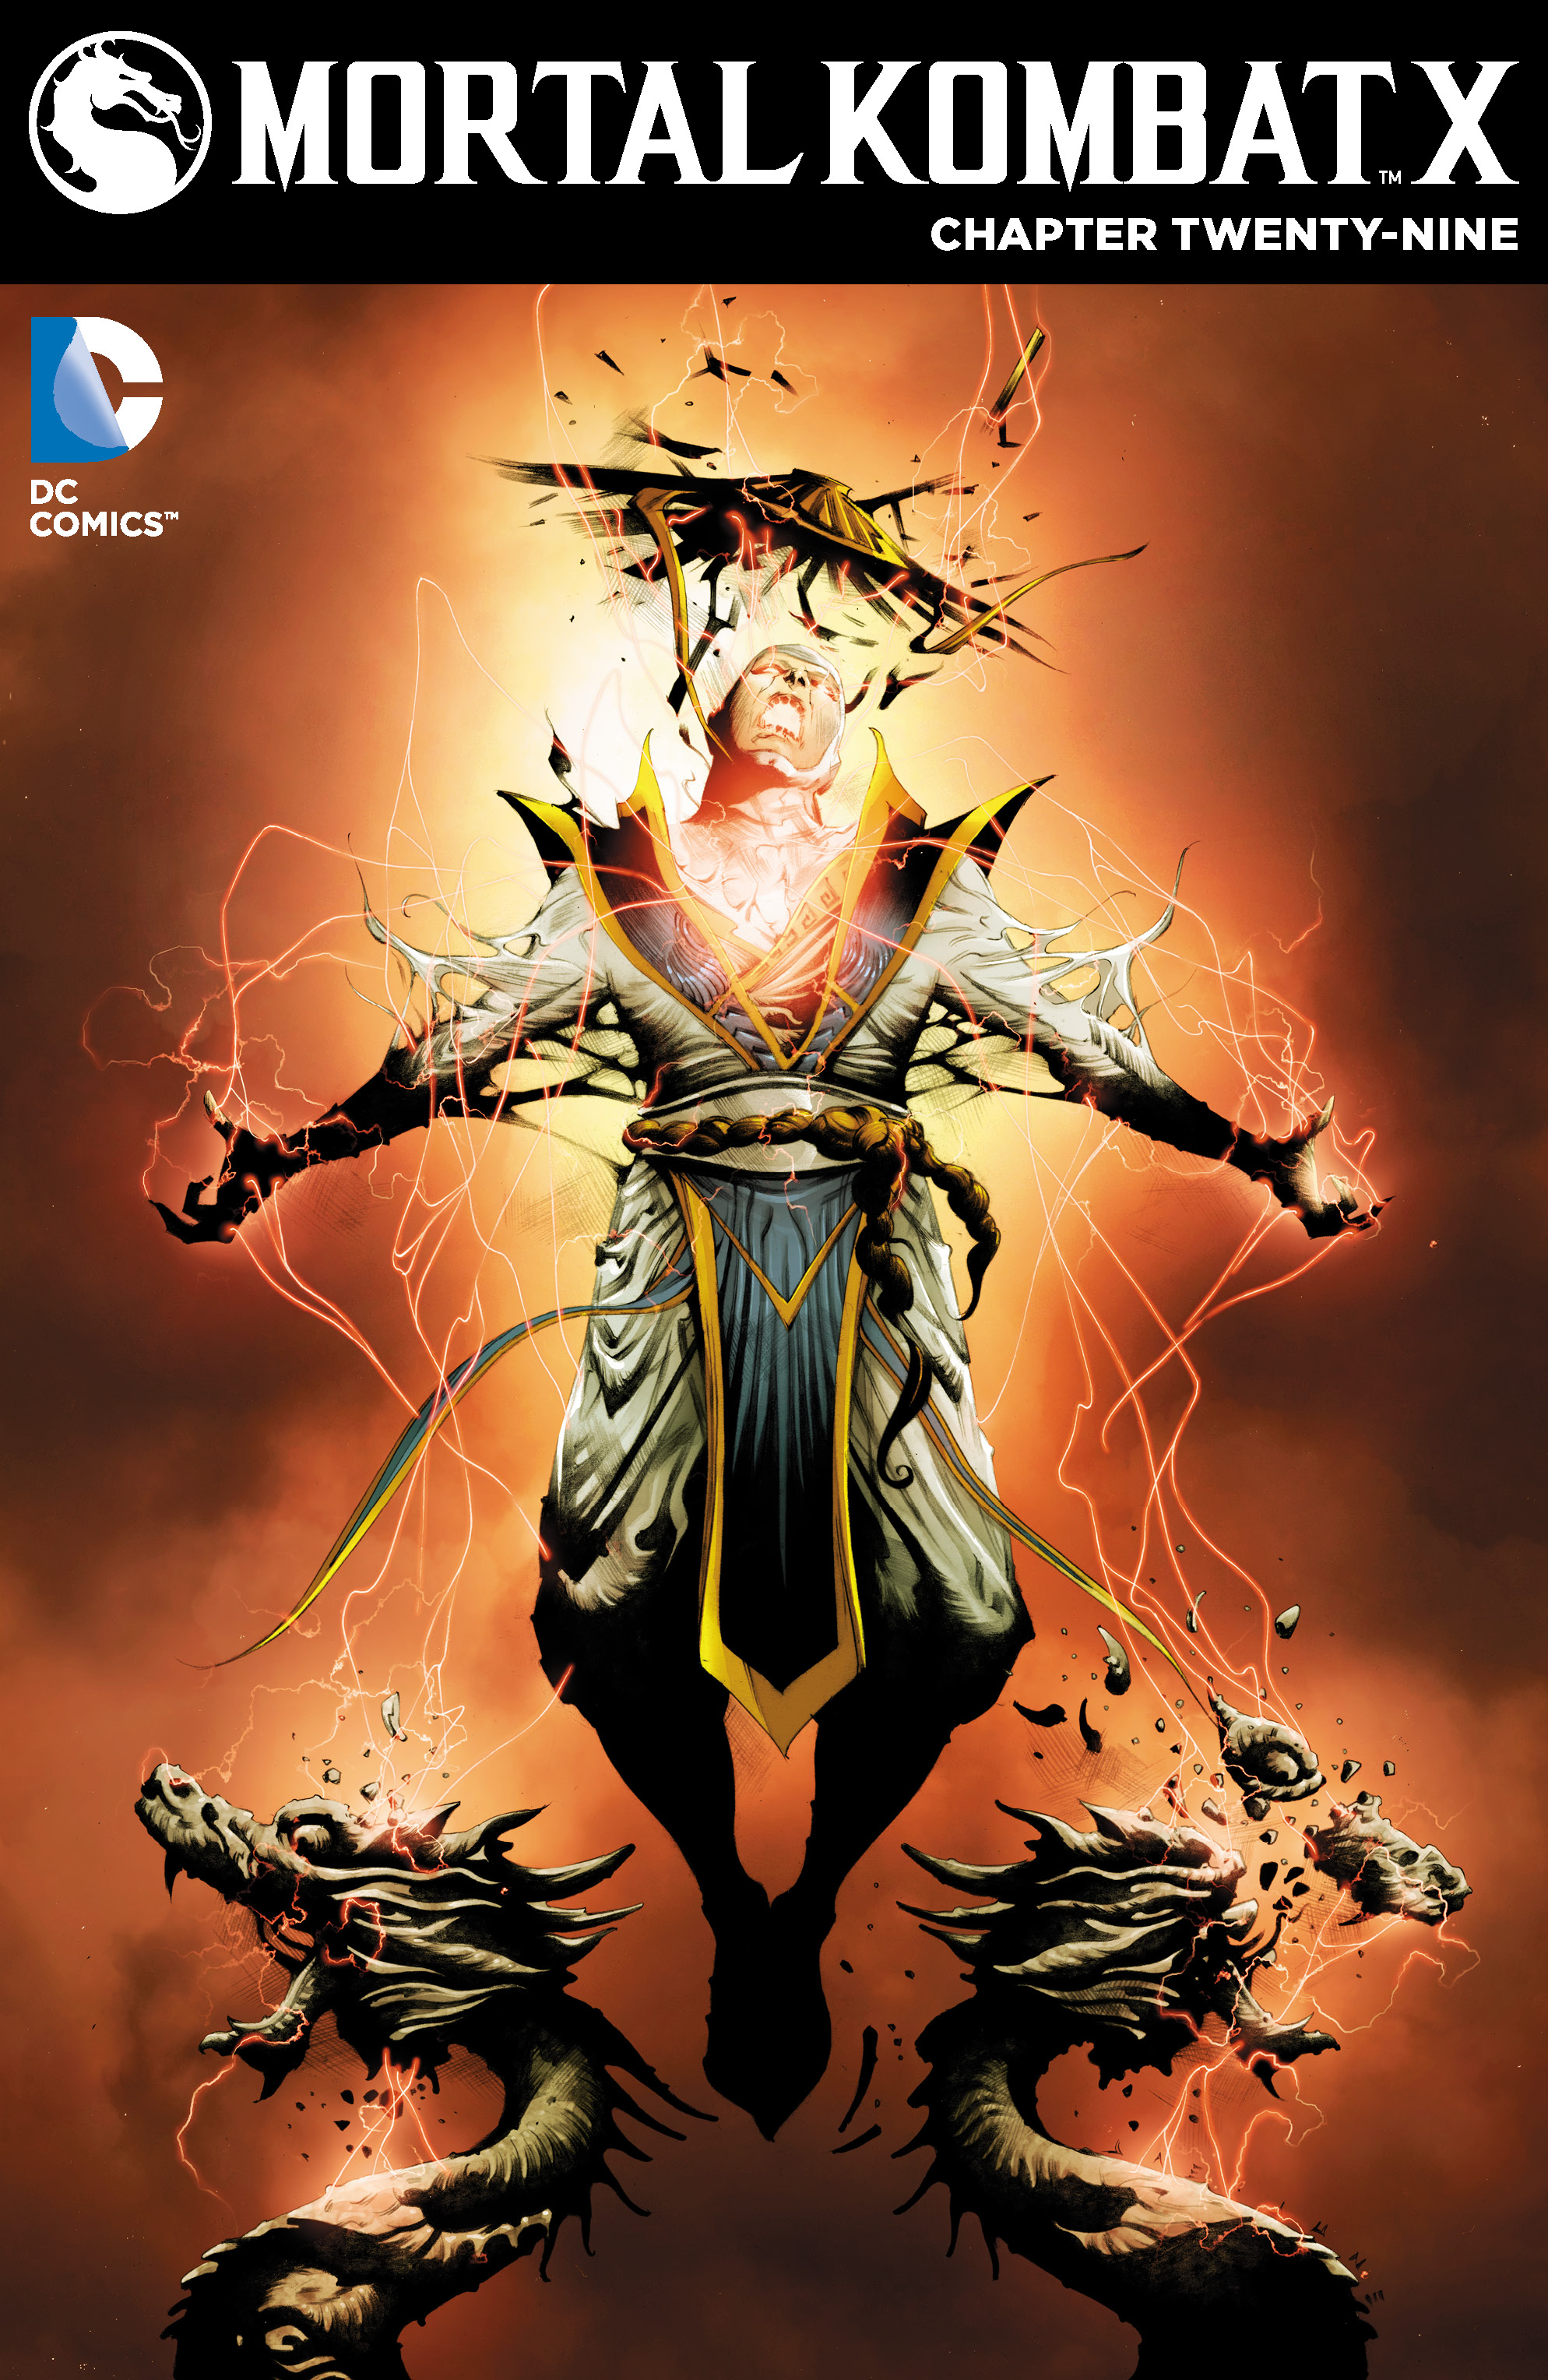 Mortal Kombat X #29 preview images